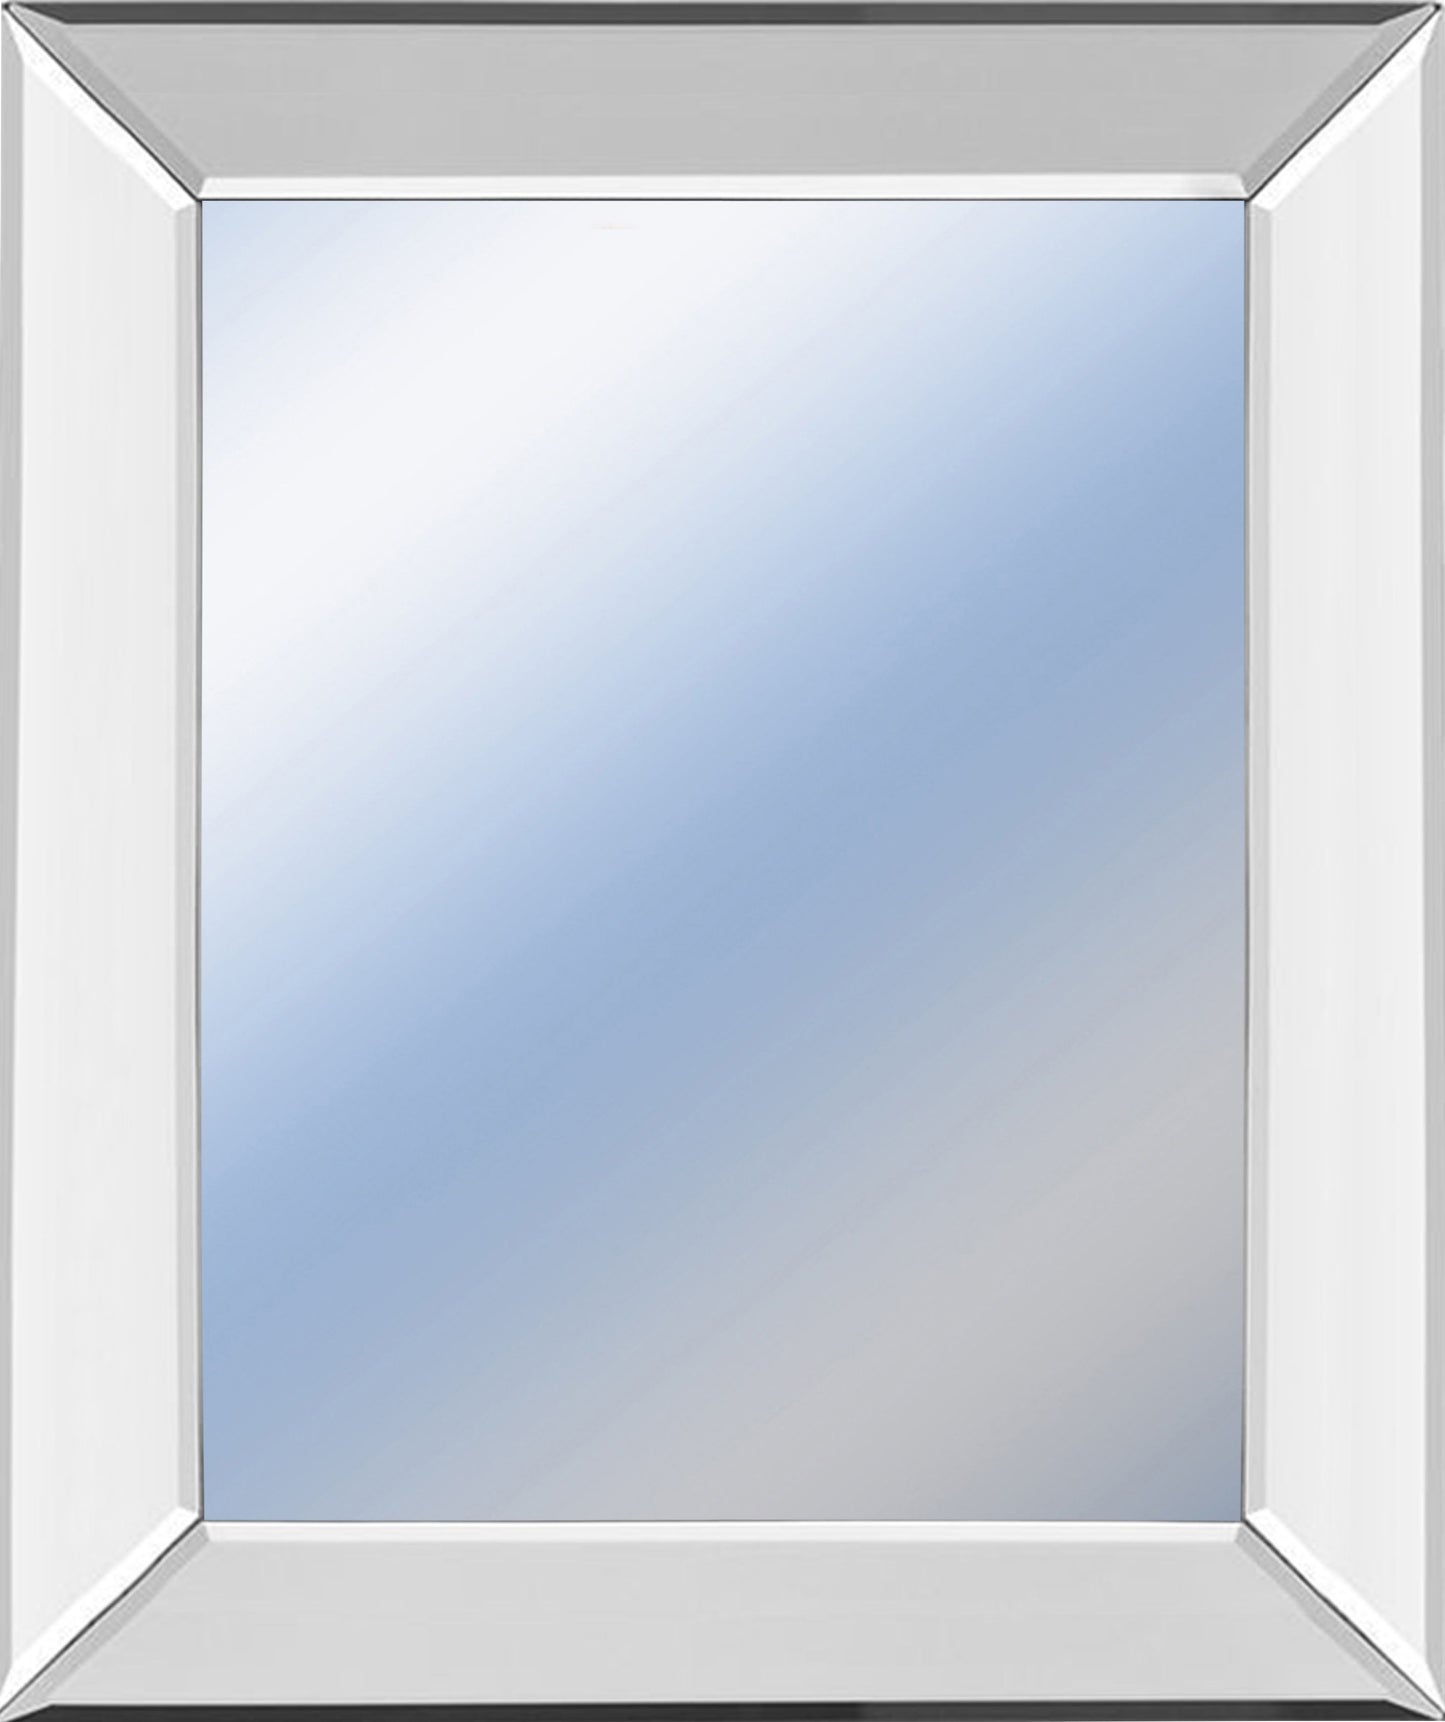 22x26 Decorative Framed Wall Mirror By Classy Art Mirror - White